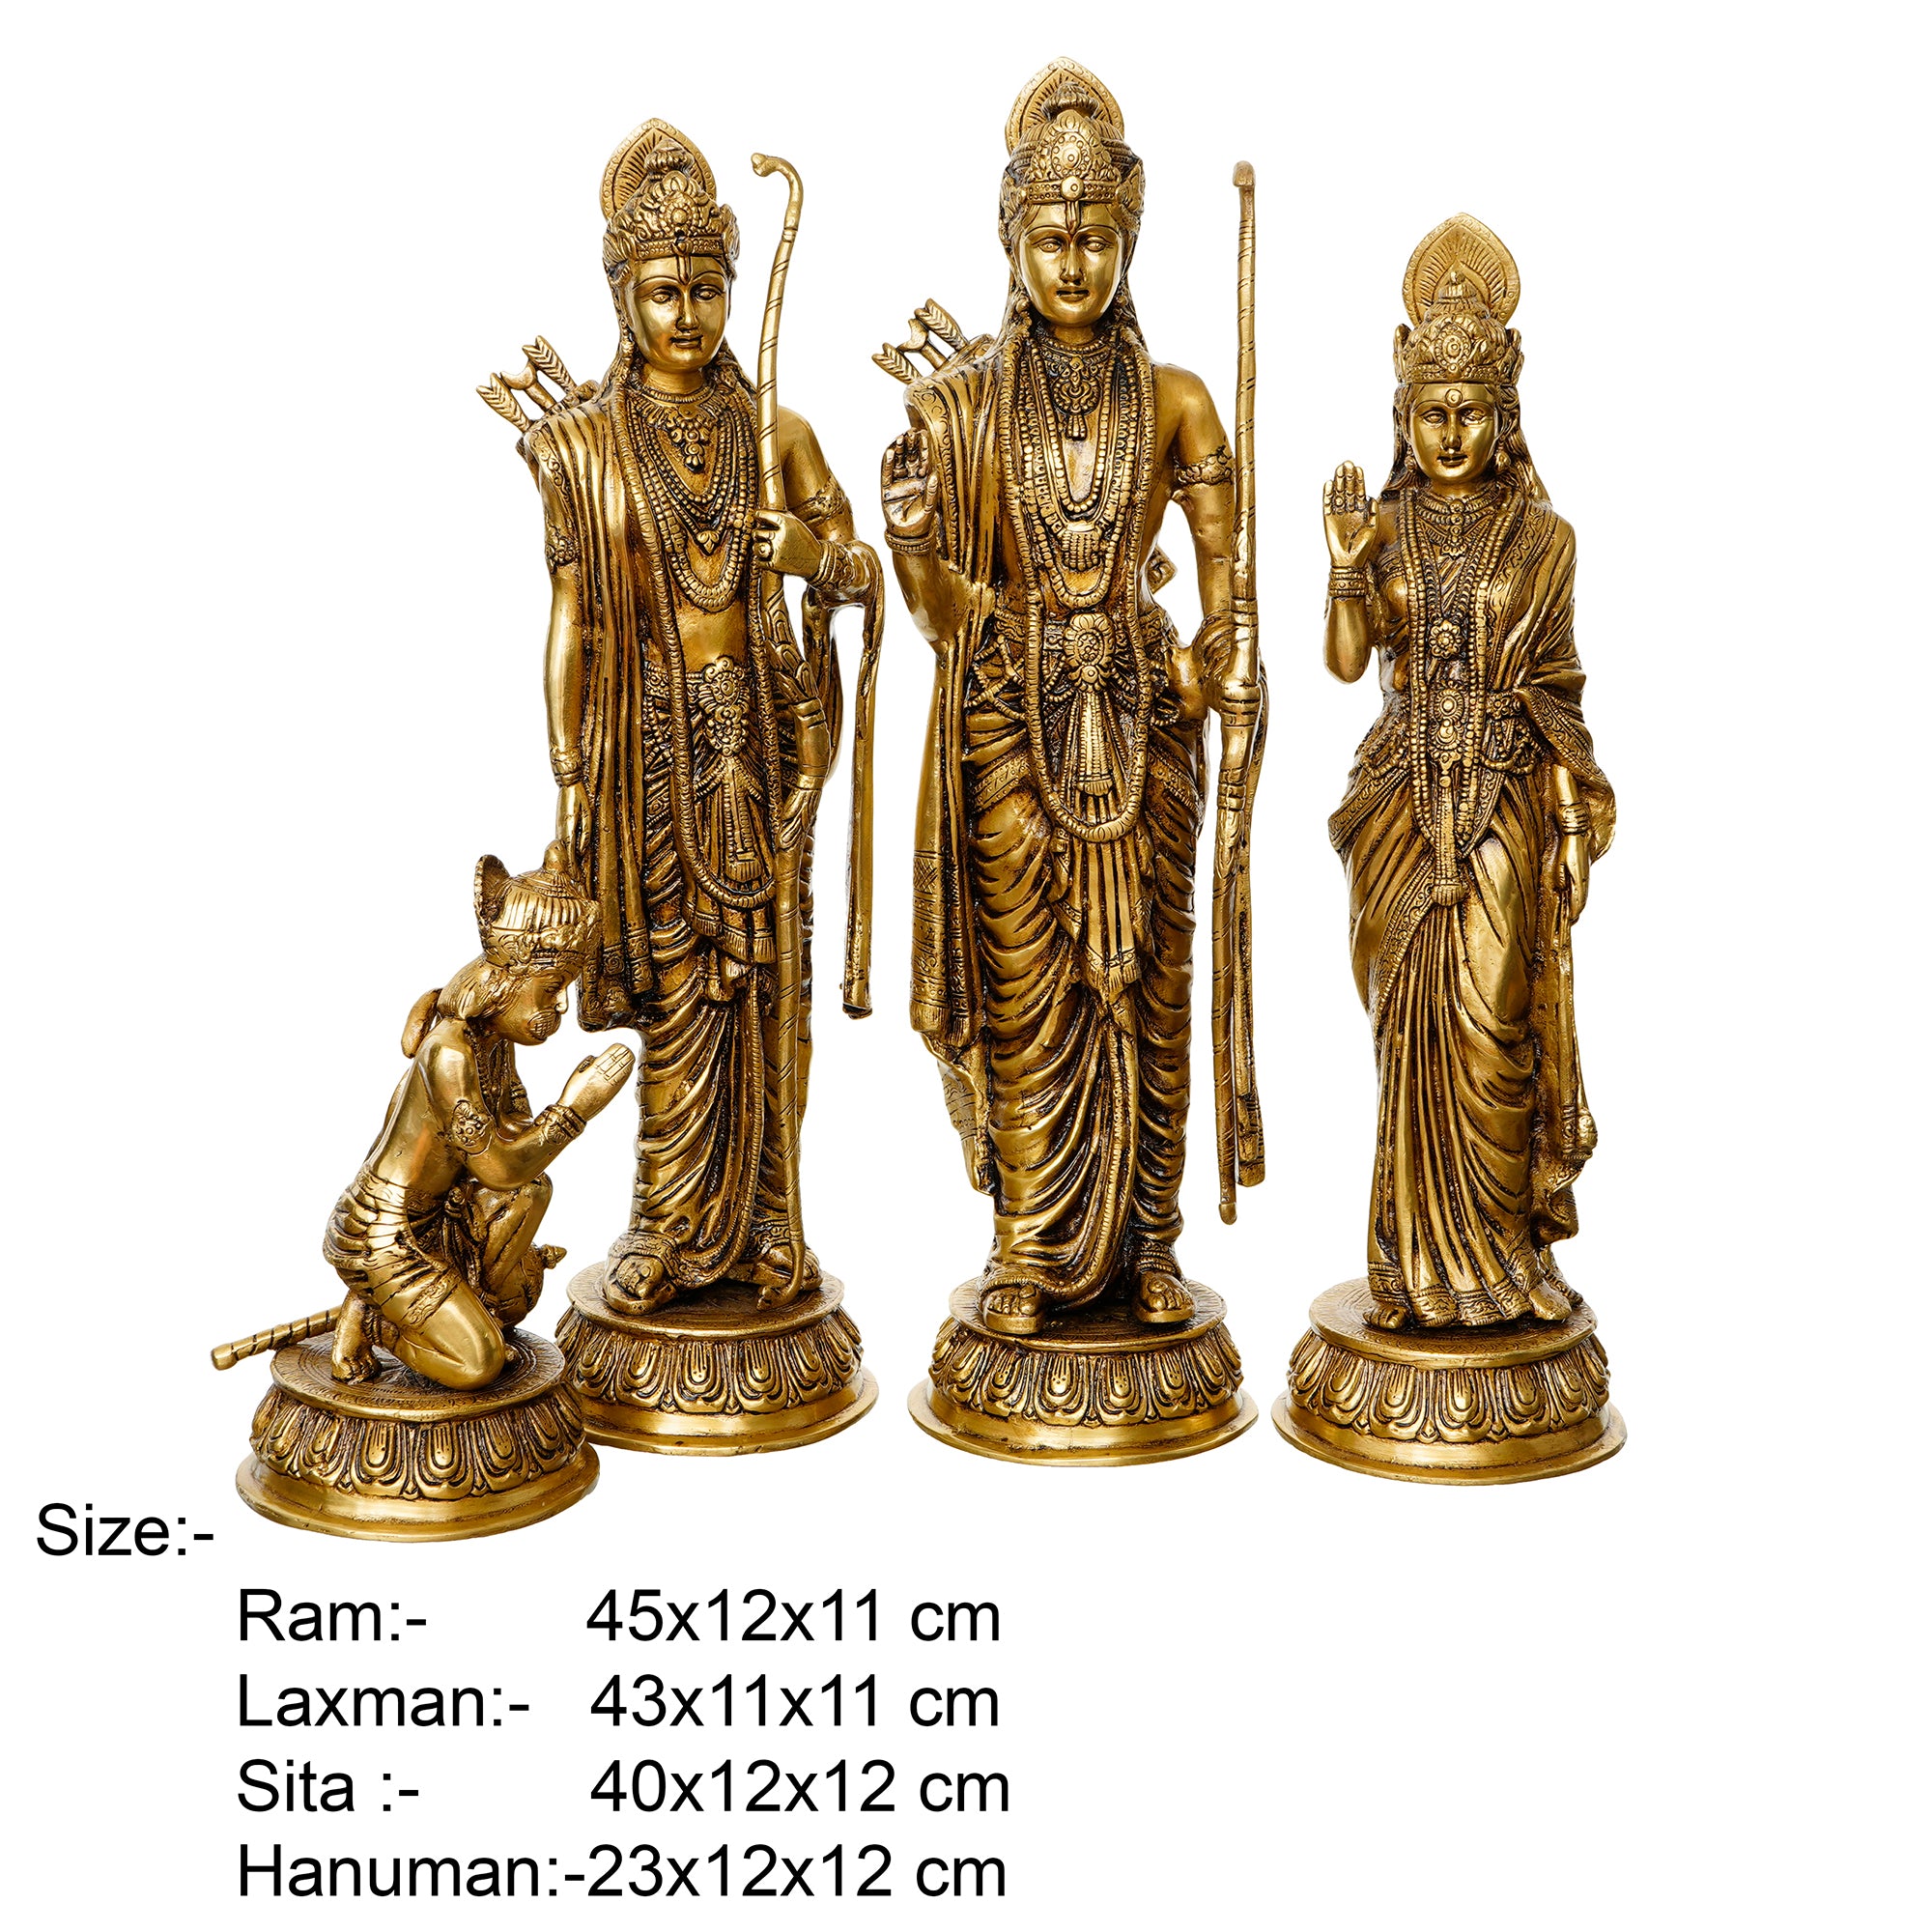 Golden Brass Handcrafted Ram Darbar - Lord Ram, Sita and Laxman Along With Lord Hanuman Idols 4